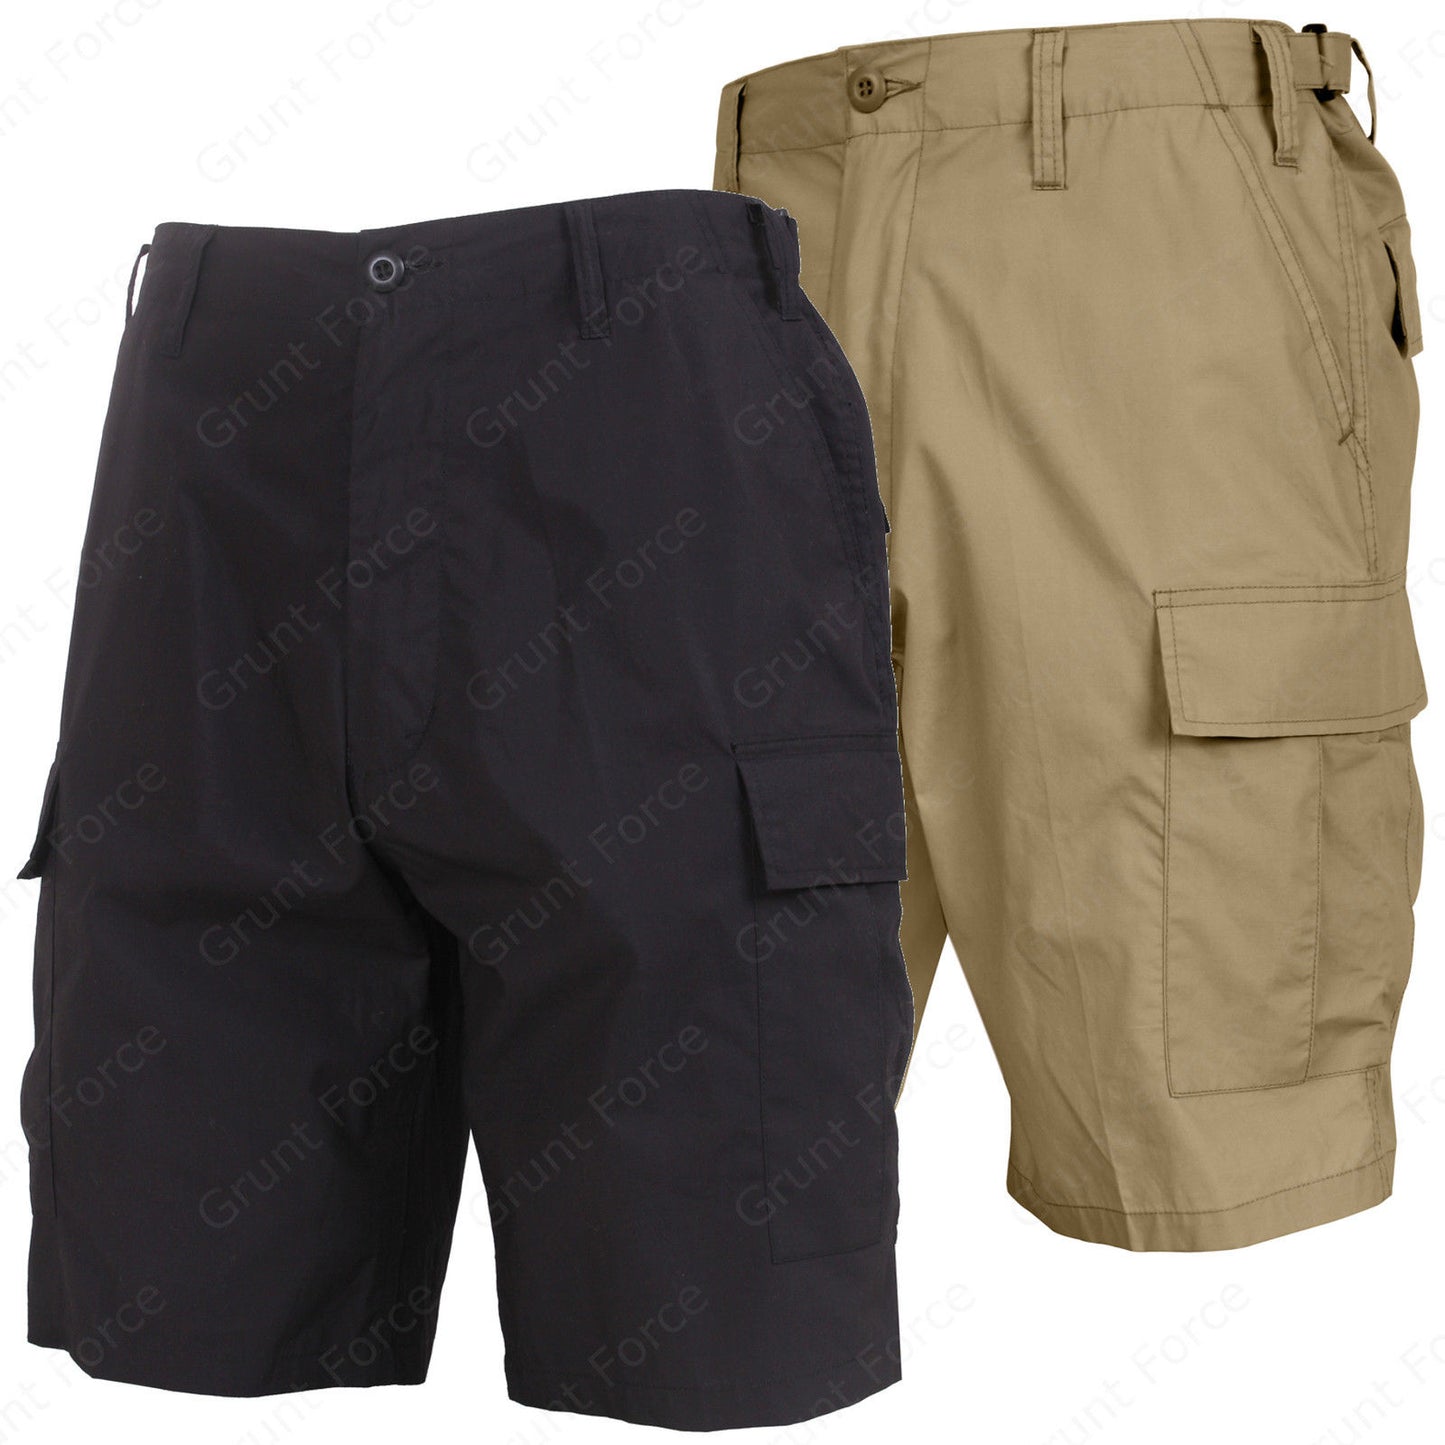 Black or Khaki Lightweight Tactical BDU Shorts - Rothco Summer Weight Shorts